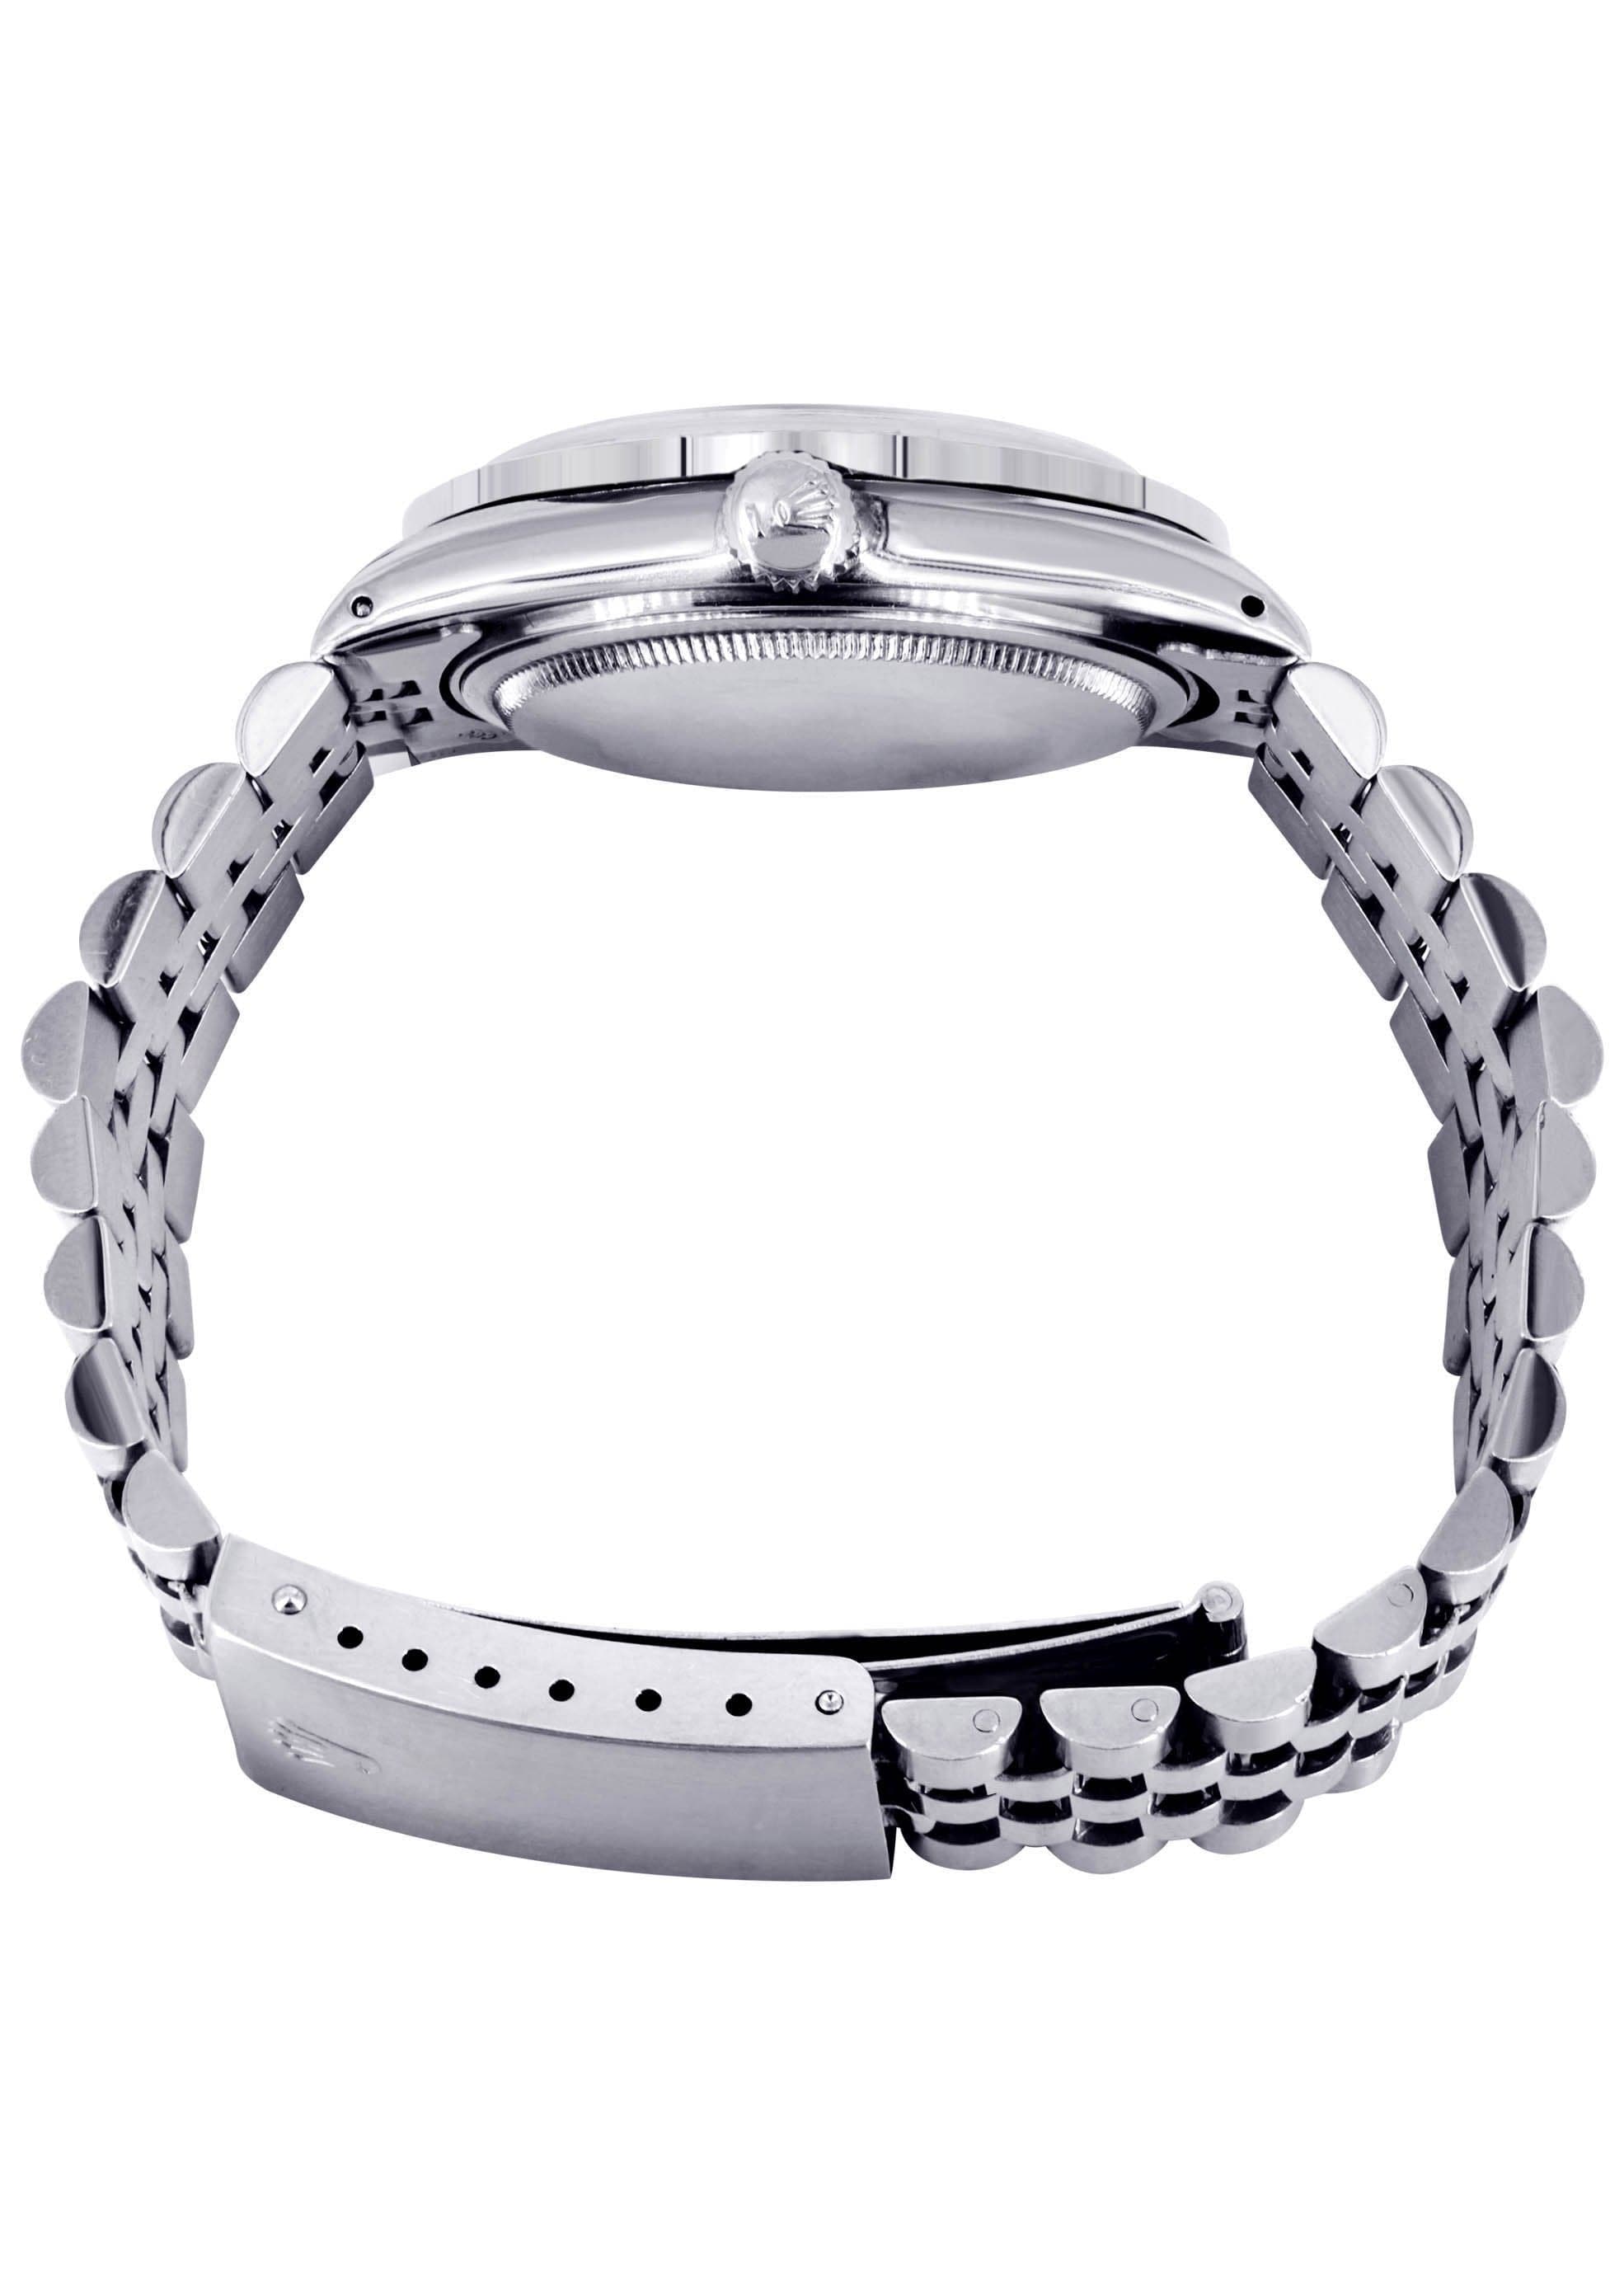 Diamond Gold Rolex Watch For Men 16200 | 36Mm | Rainbow Sapphire Bezel | Pink Flower Pattern Dial | Jubilee Band